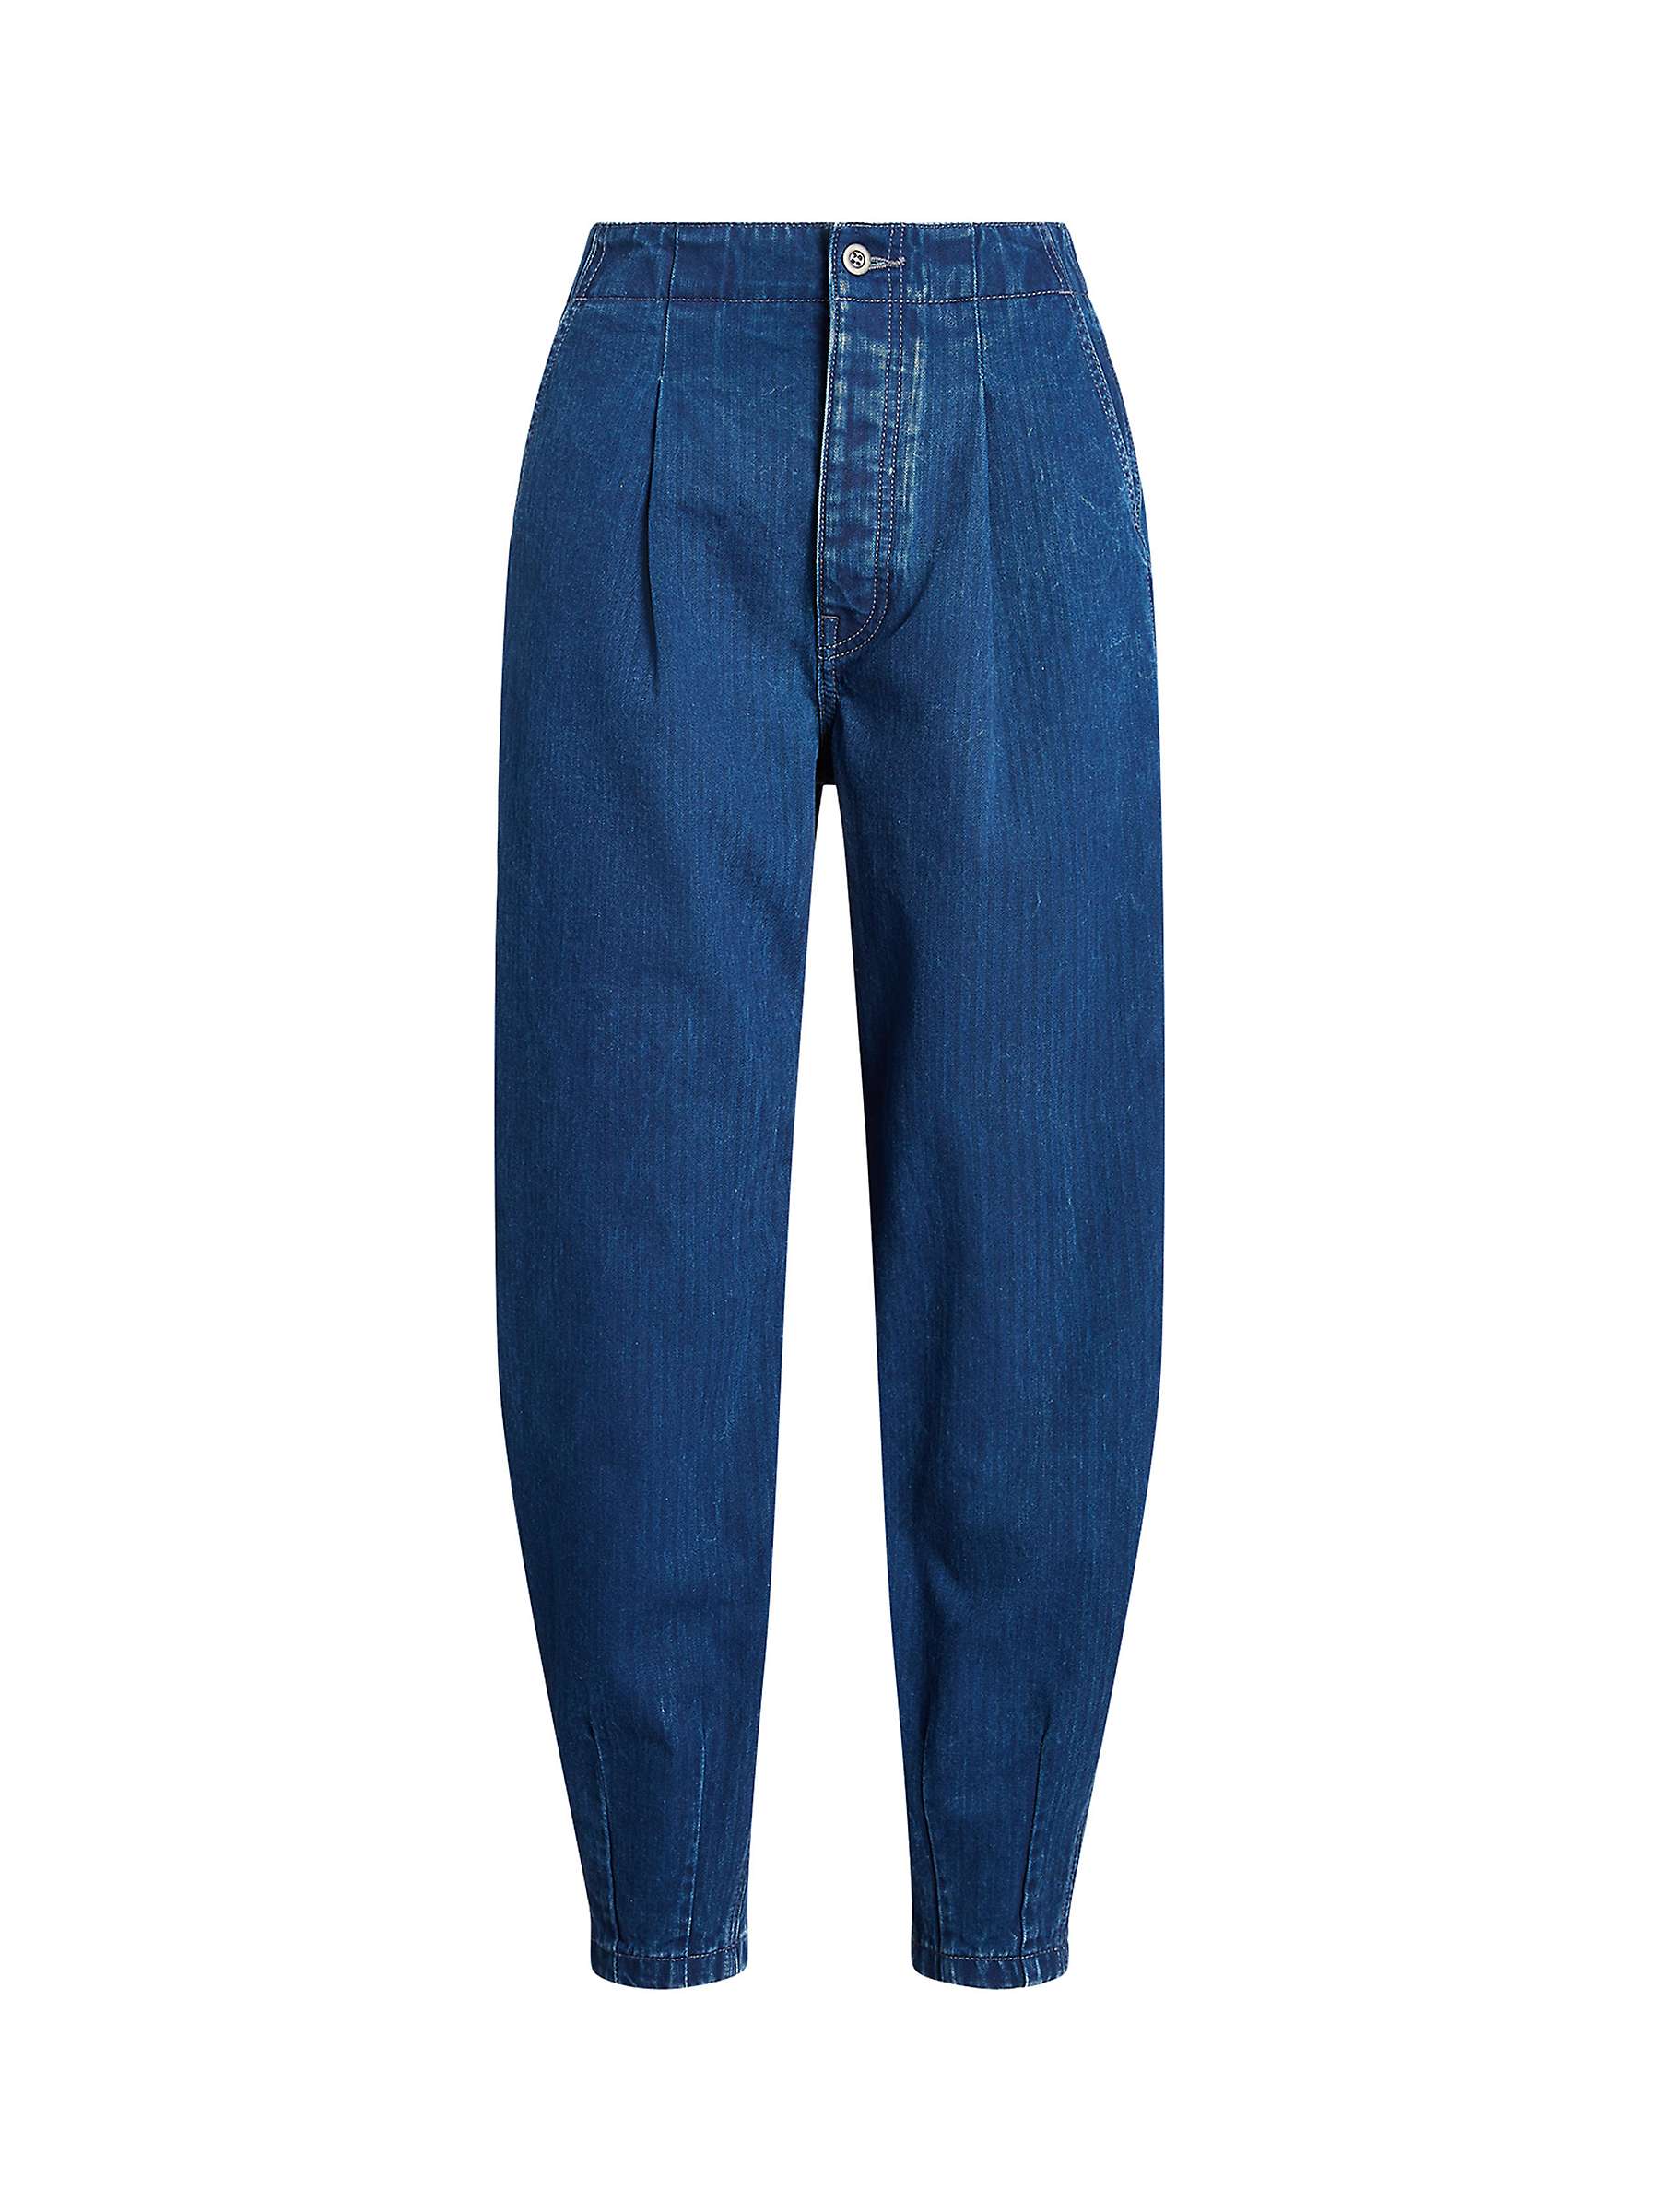 Buy Polo Ralph Lauren Herringbone Curved Leg Jeans, Blue Denim Online at johnlewis.com